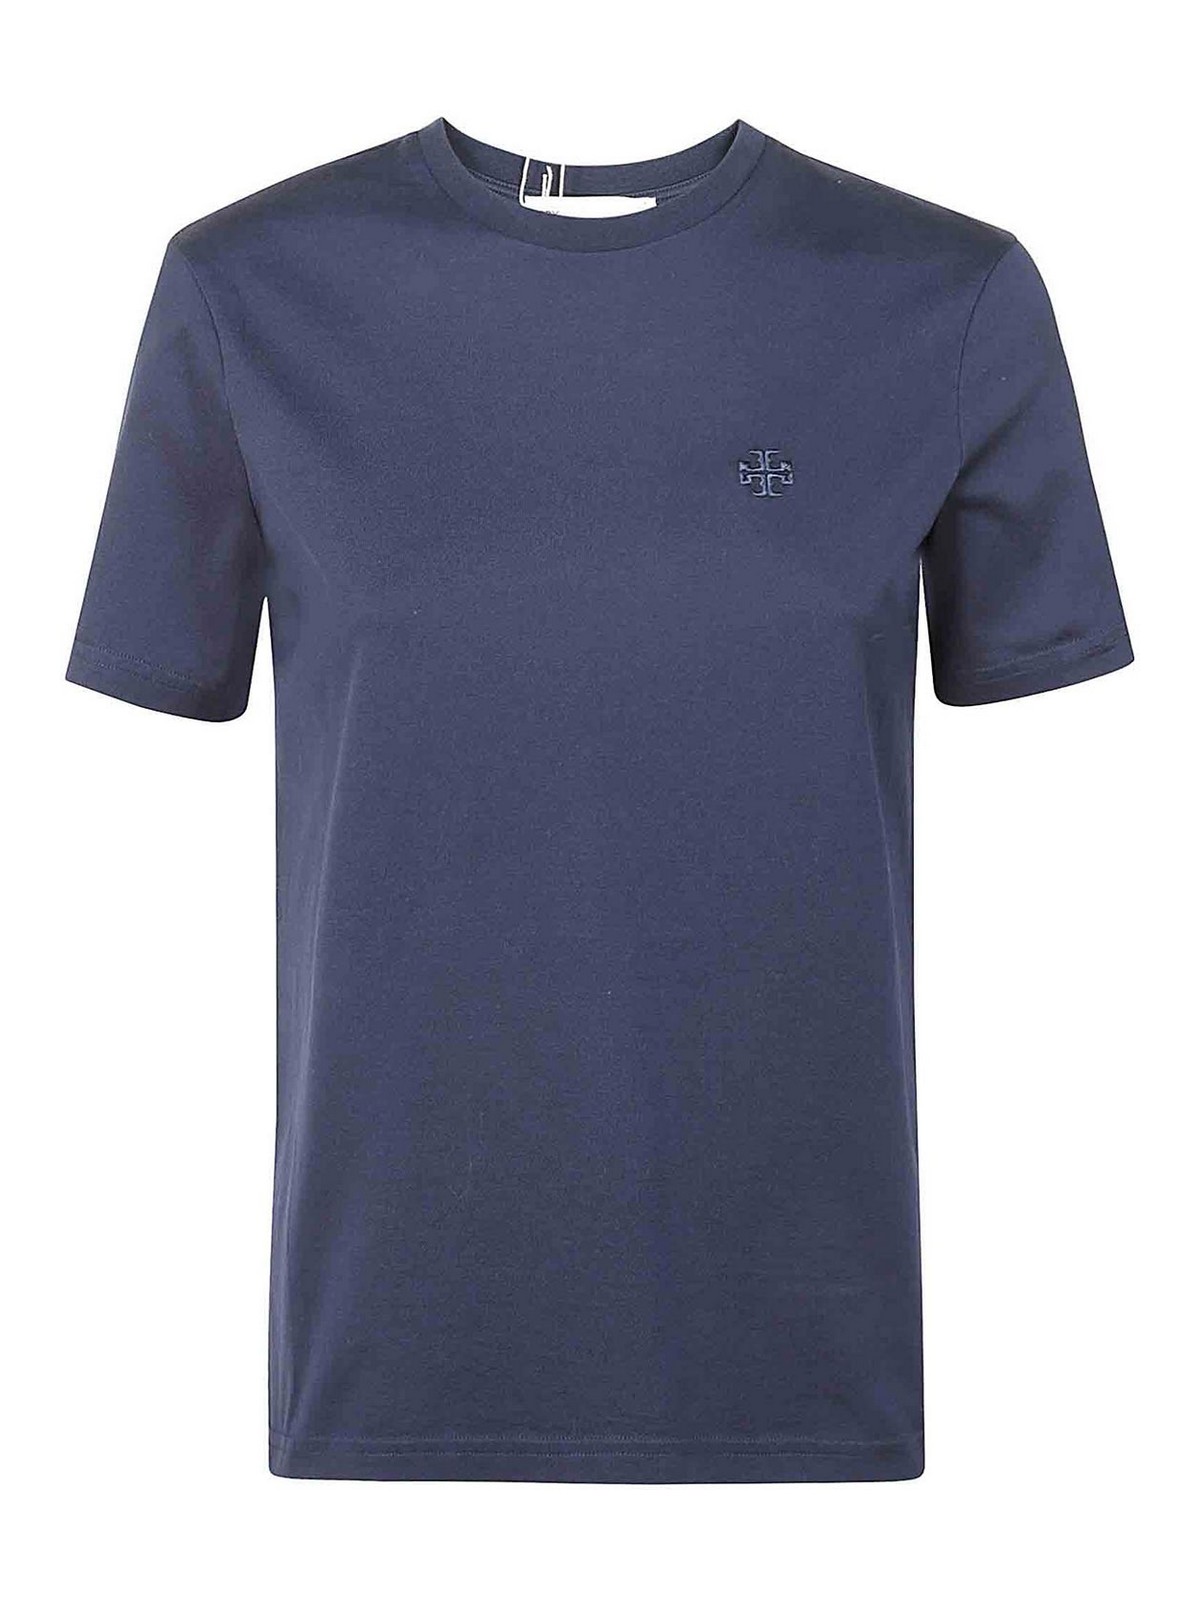 Tory Burch Jersey Tshirt Logo On Chest Crew Neck In Dark Blue